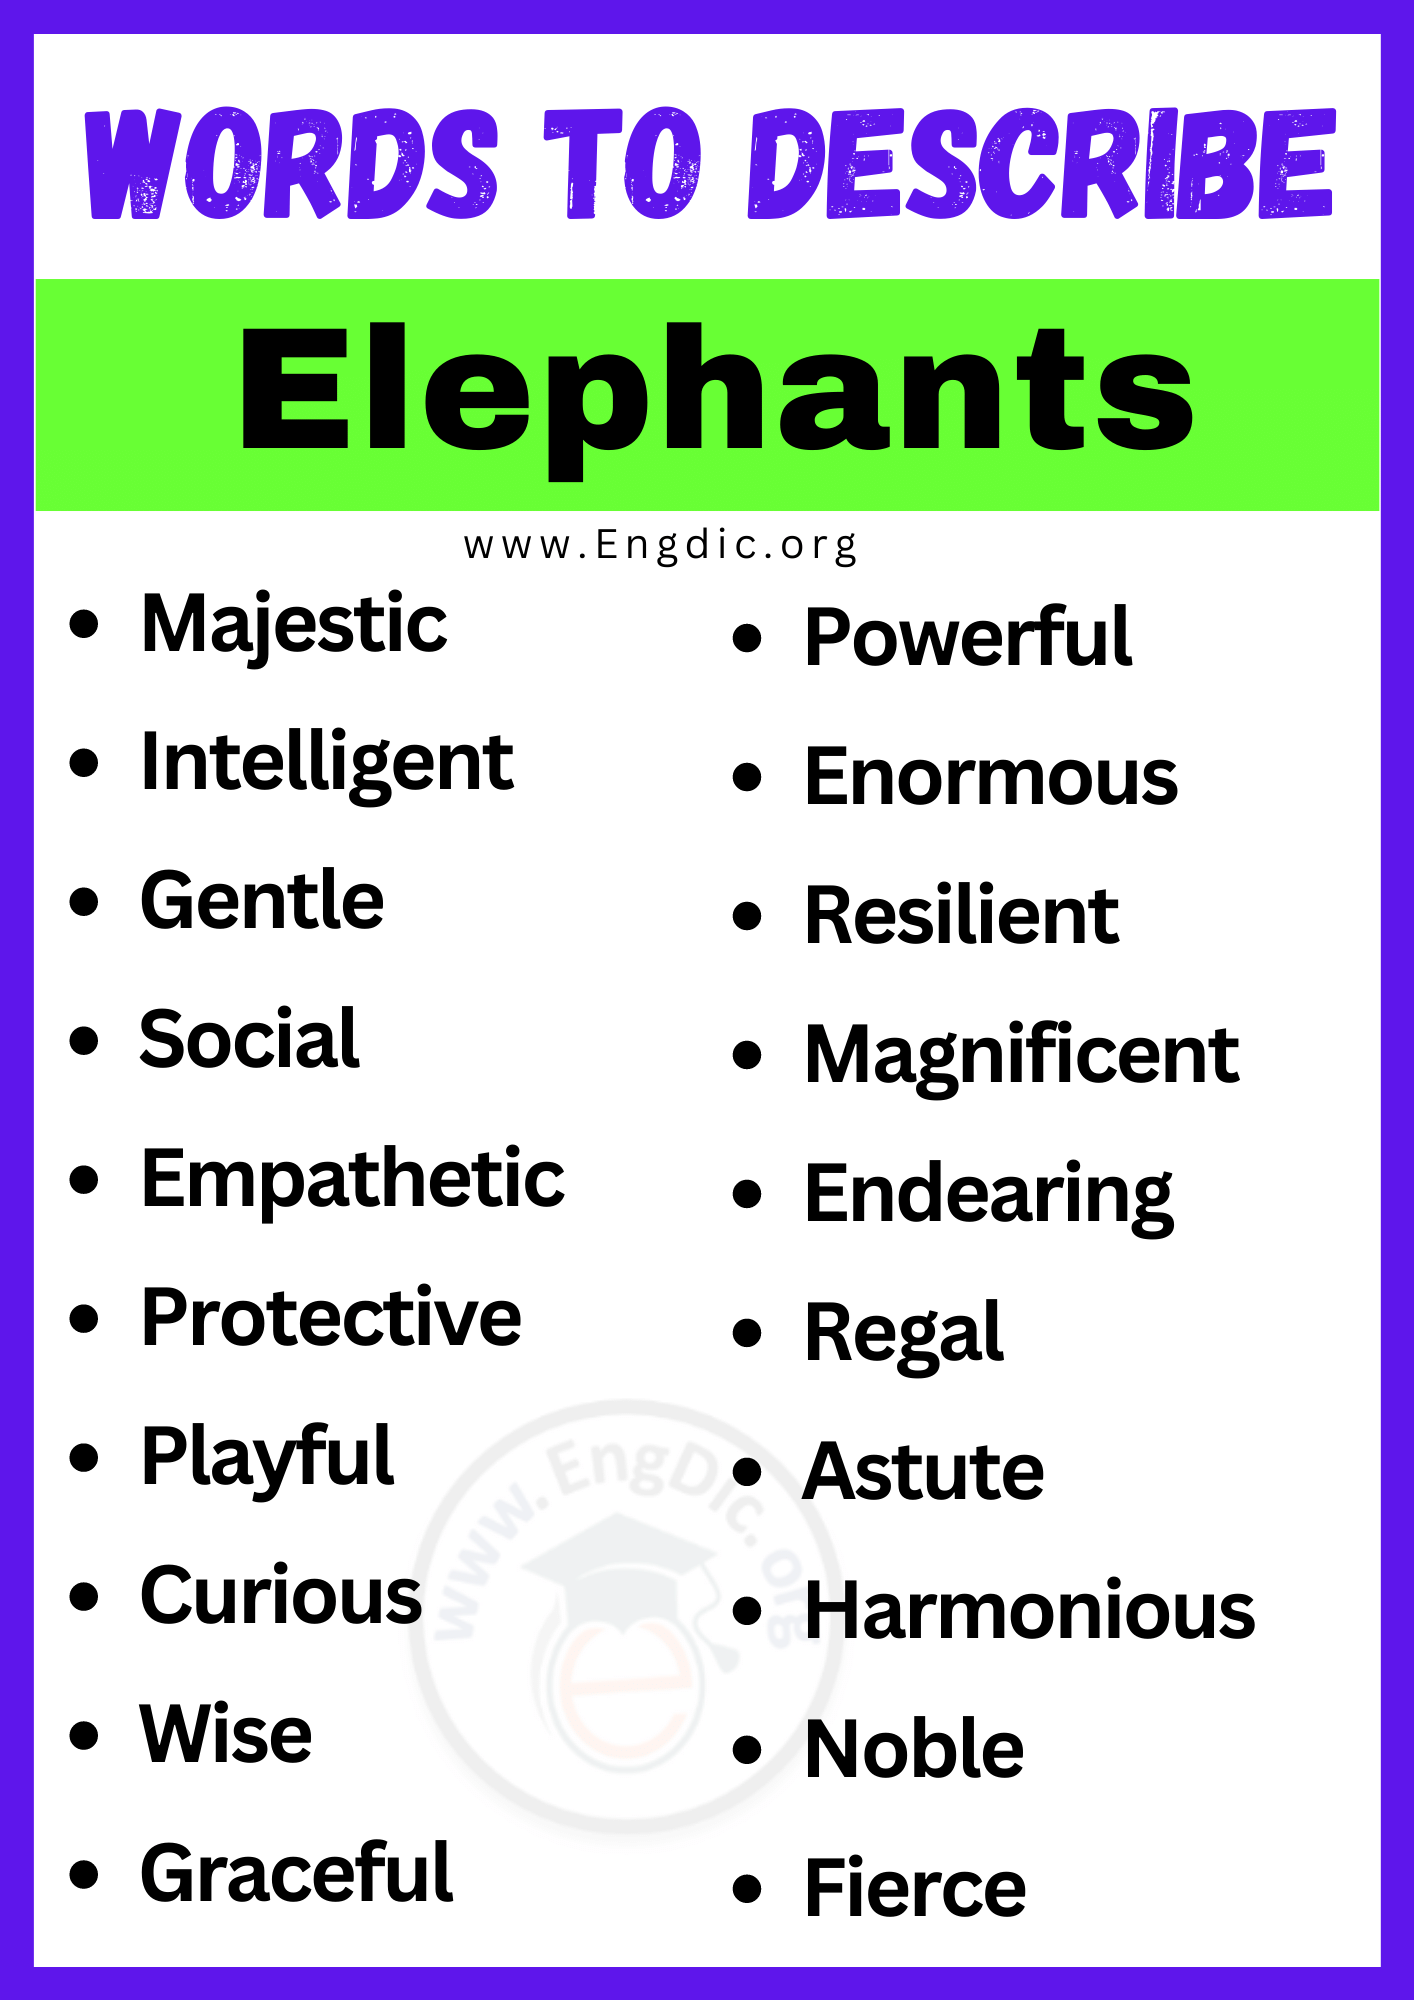 Words to Describe Elephants